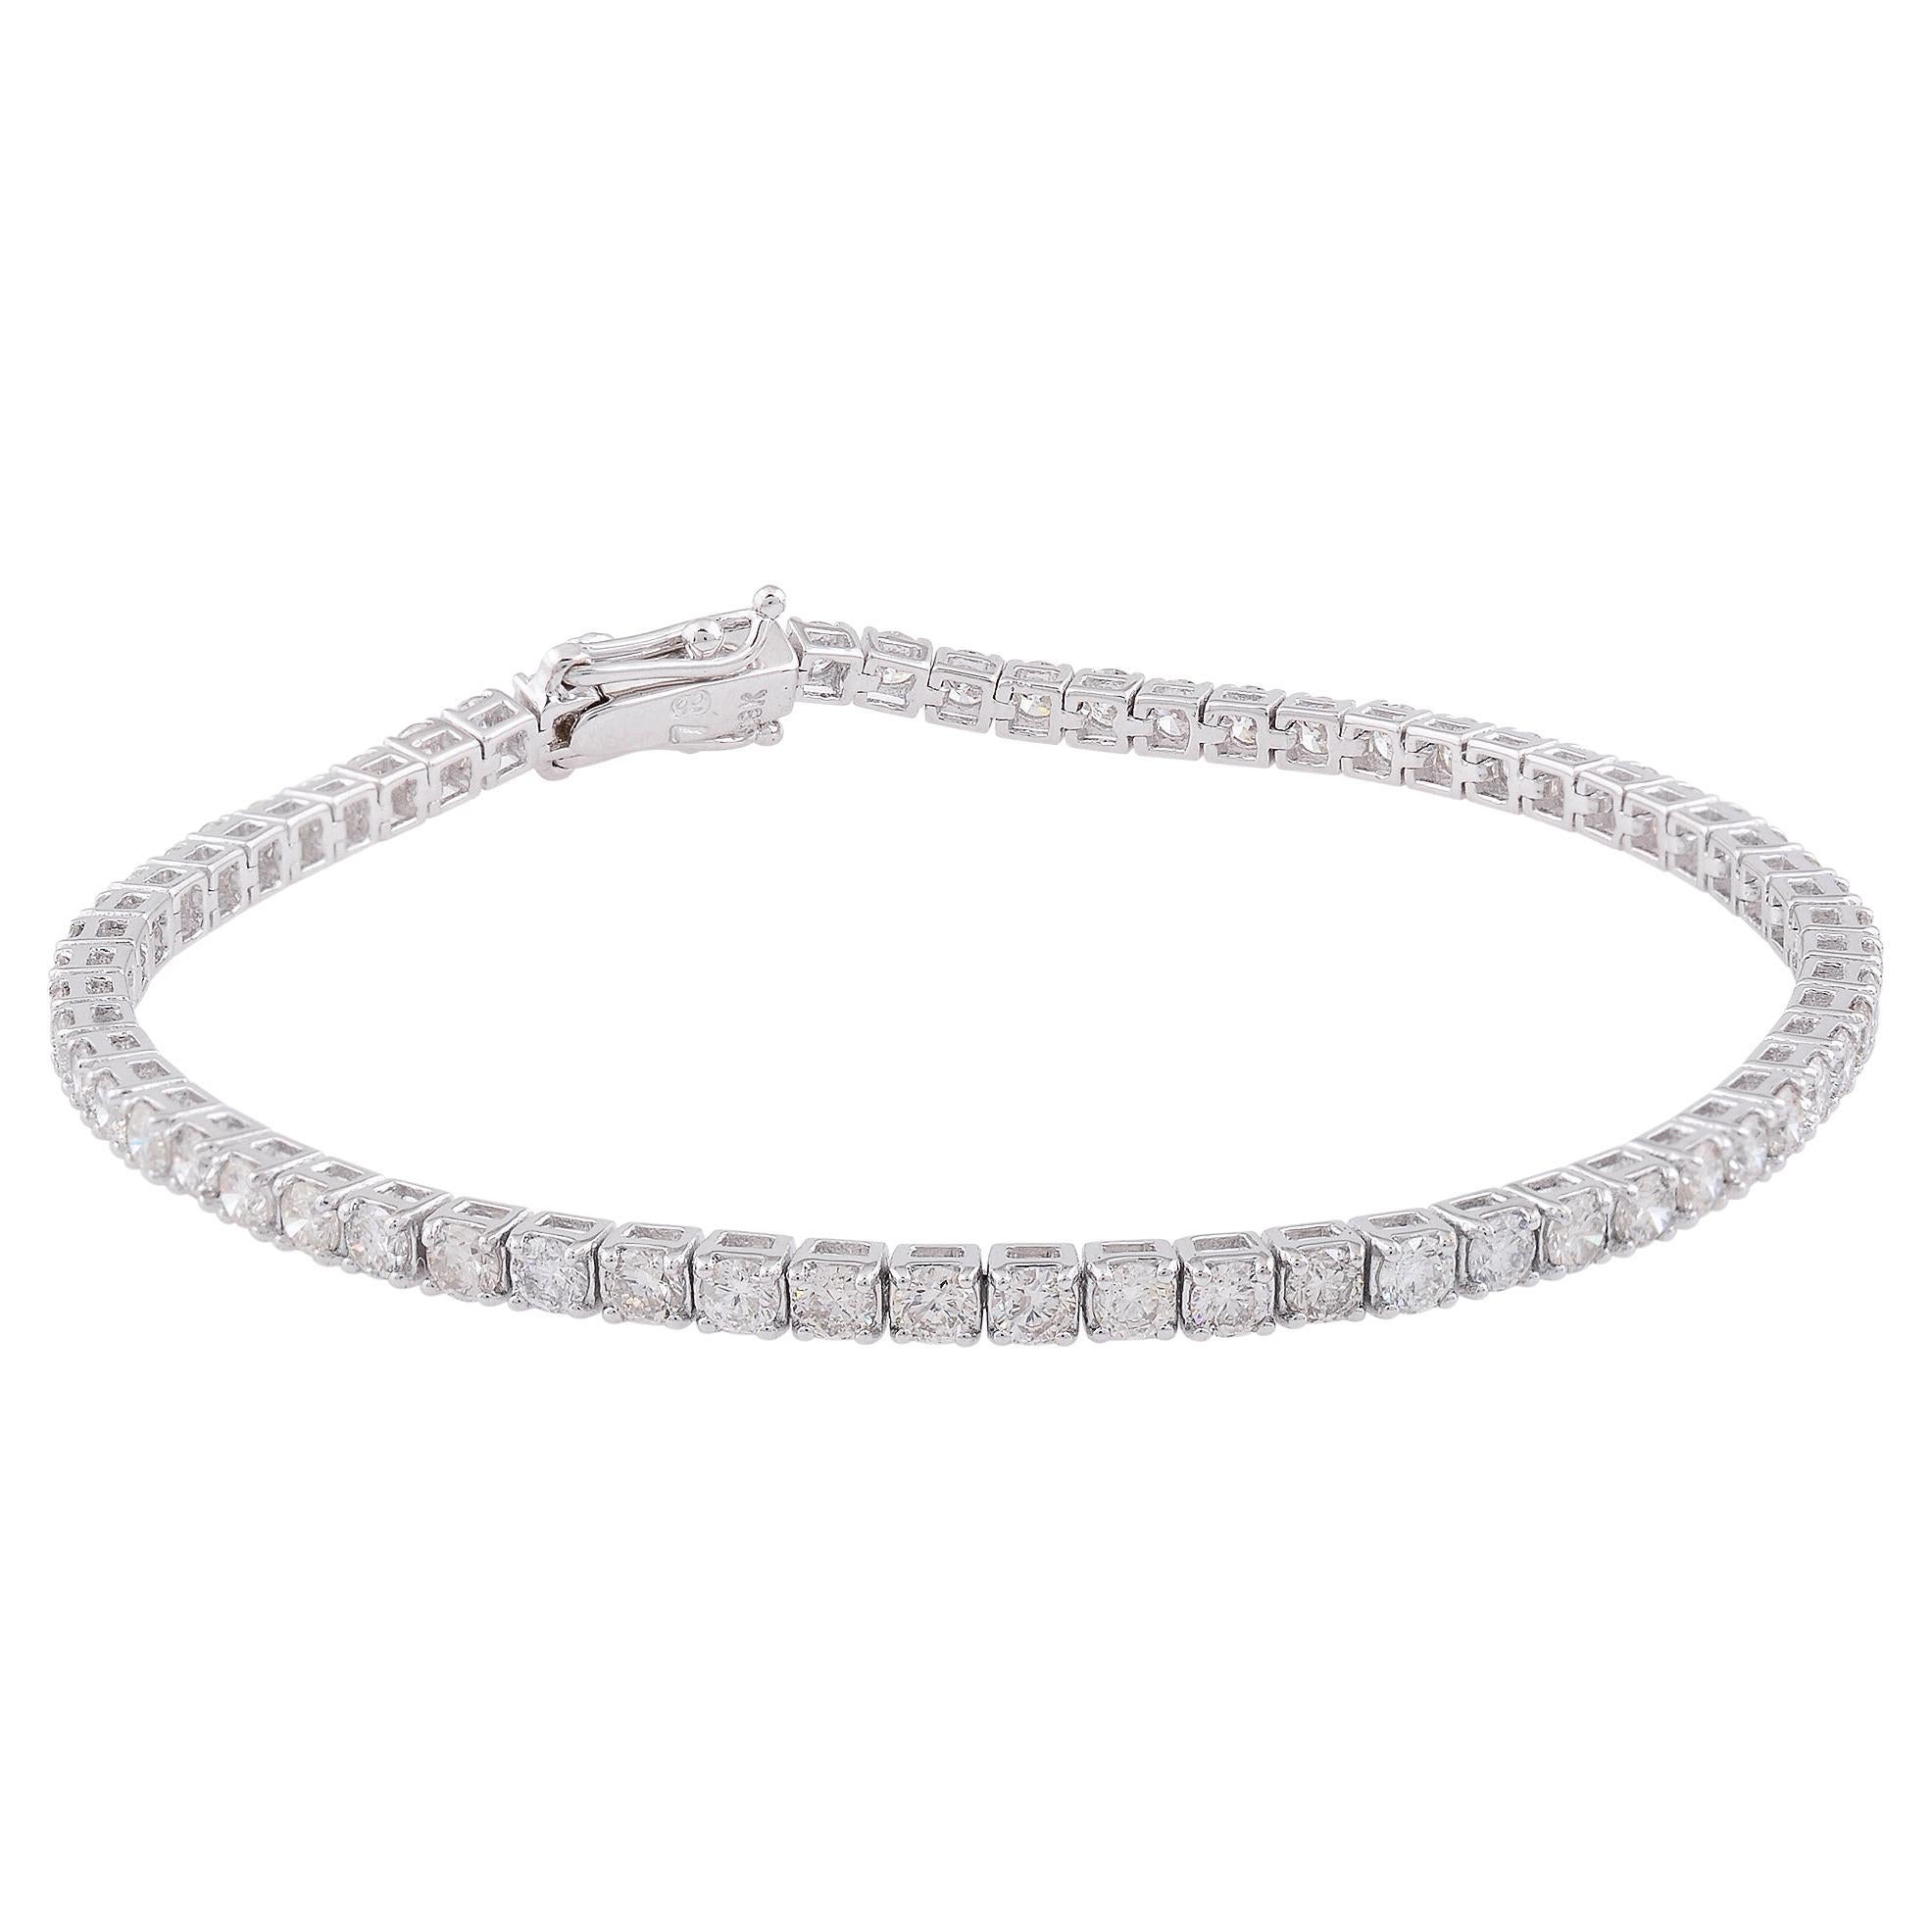 3.80 Carat SI Clarity HI Color Diamond Tennis Bracelet 18k White Gold Jewelry